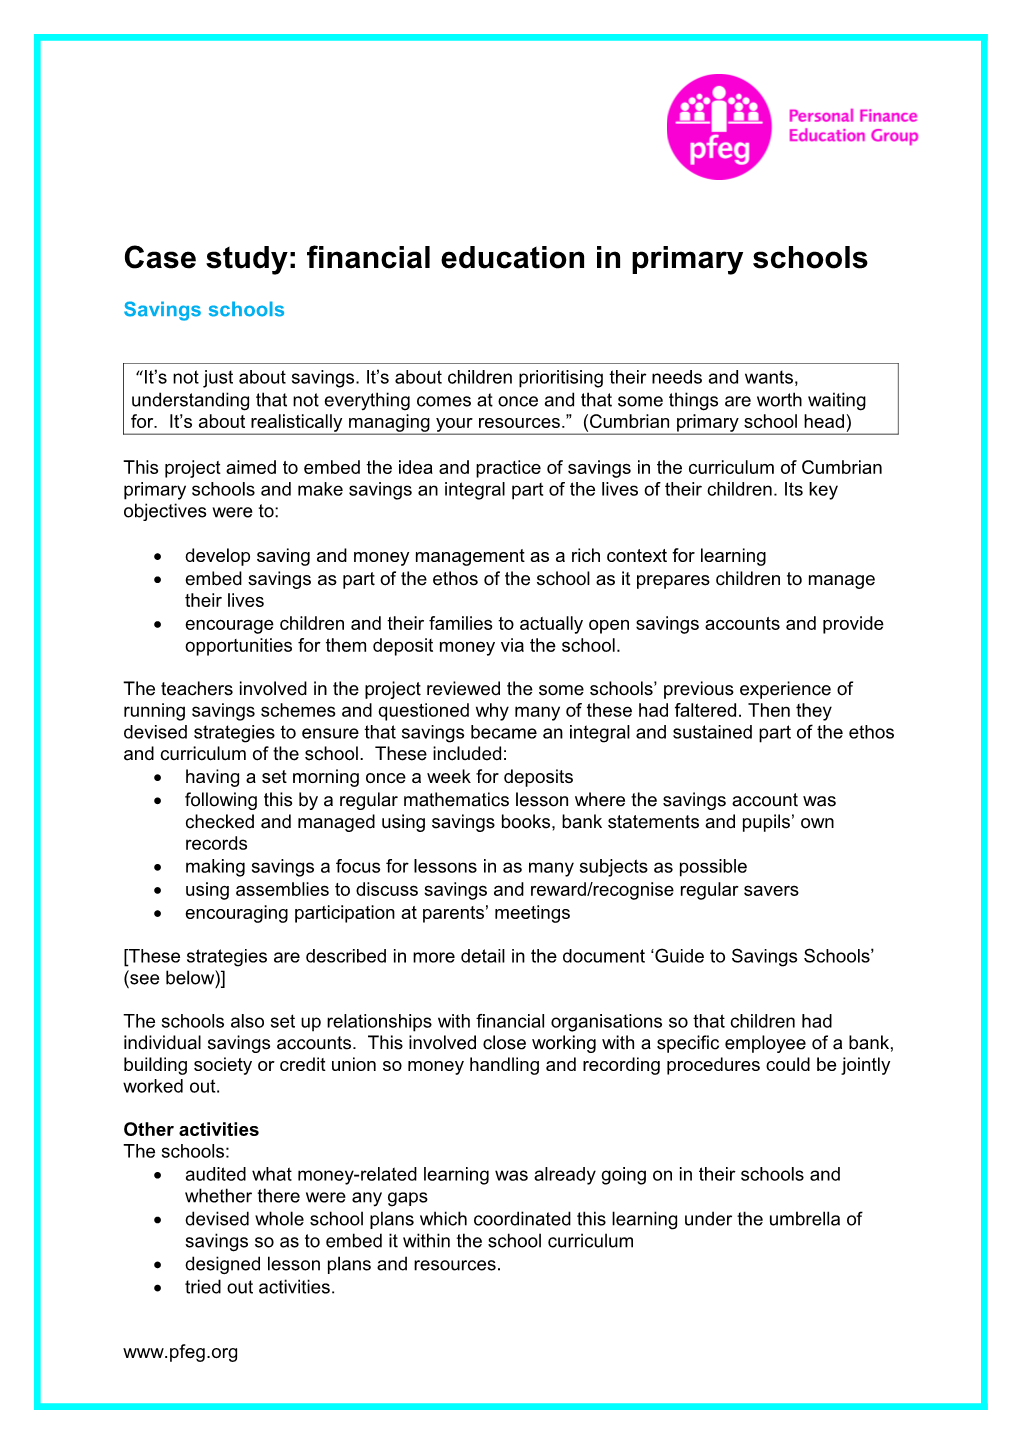 Case Study: Financial Education in Primary Schools